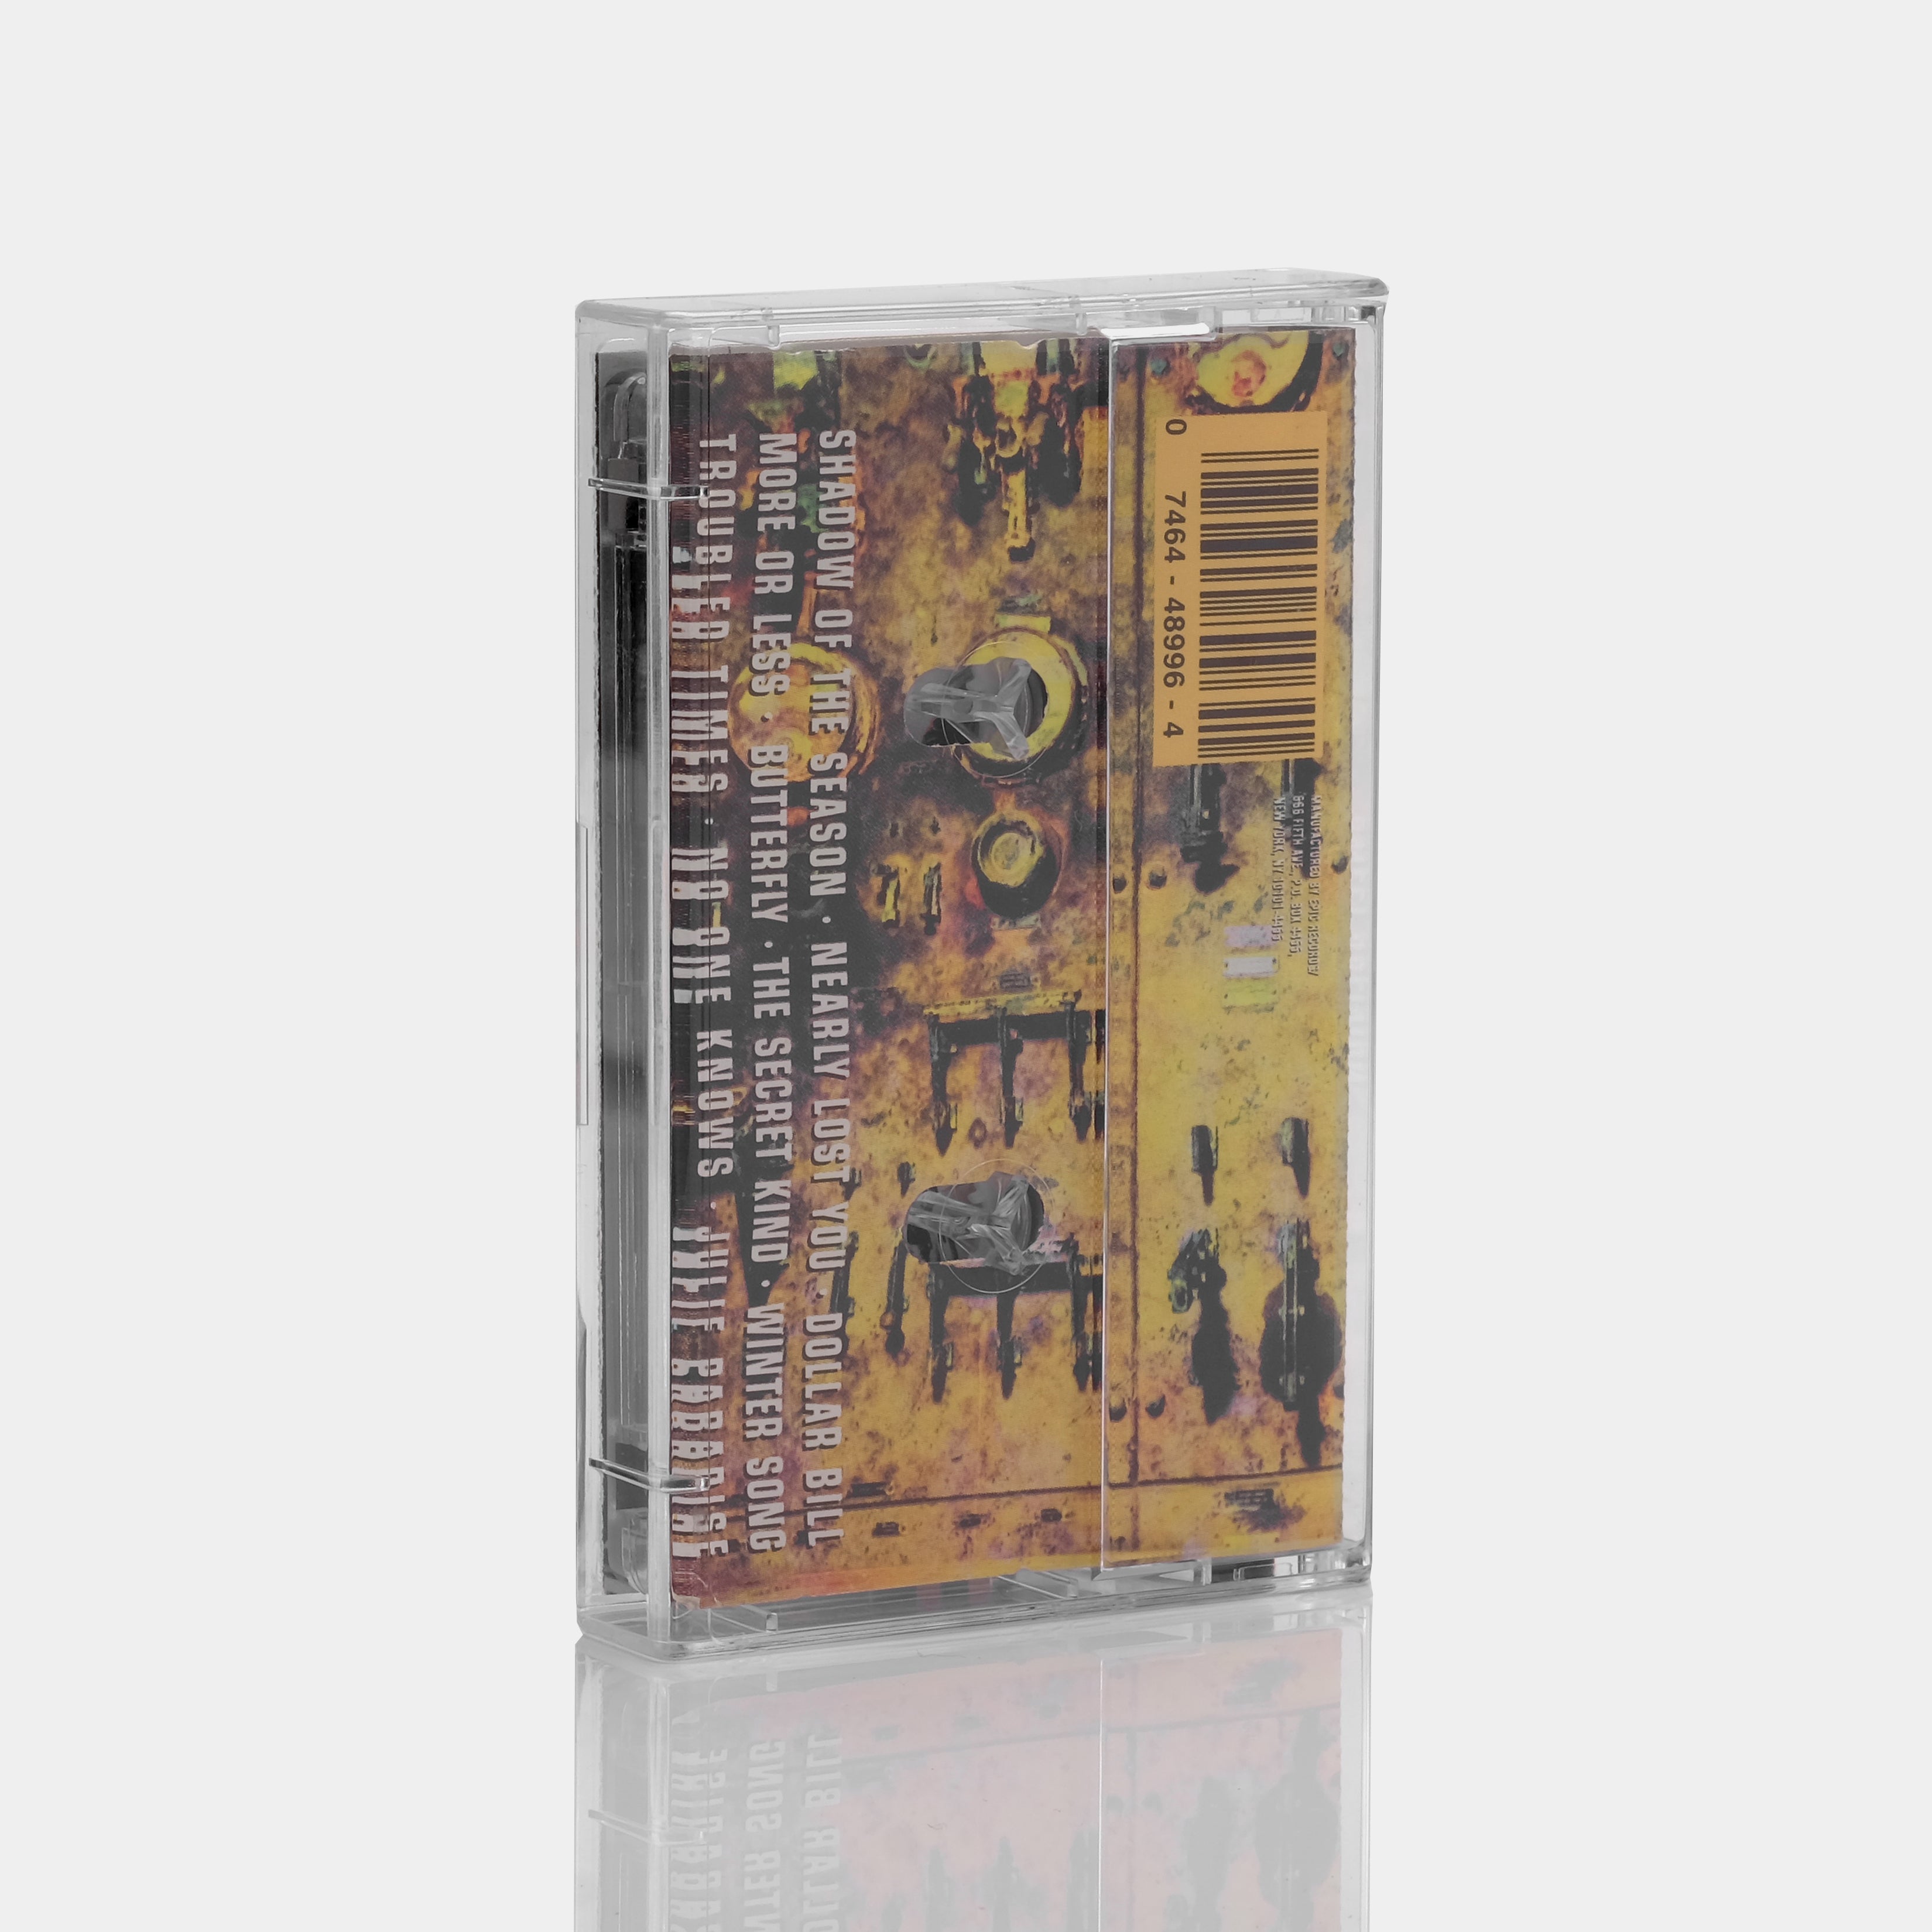 Screaming Trees - Sweet Oblivion Cassette Tape